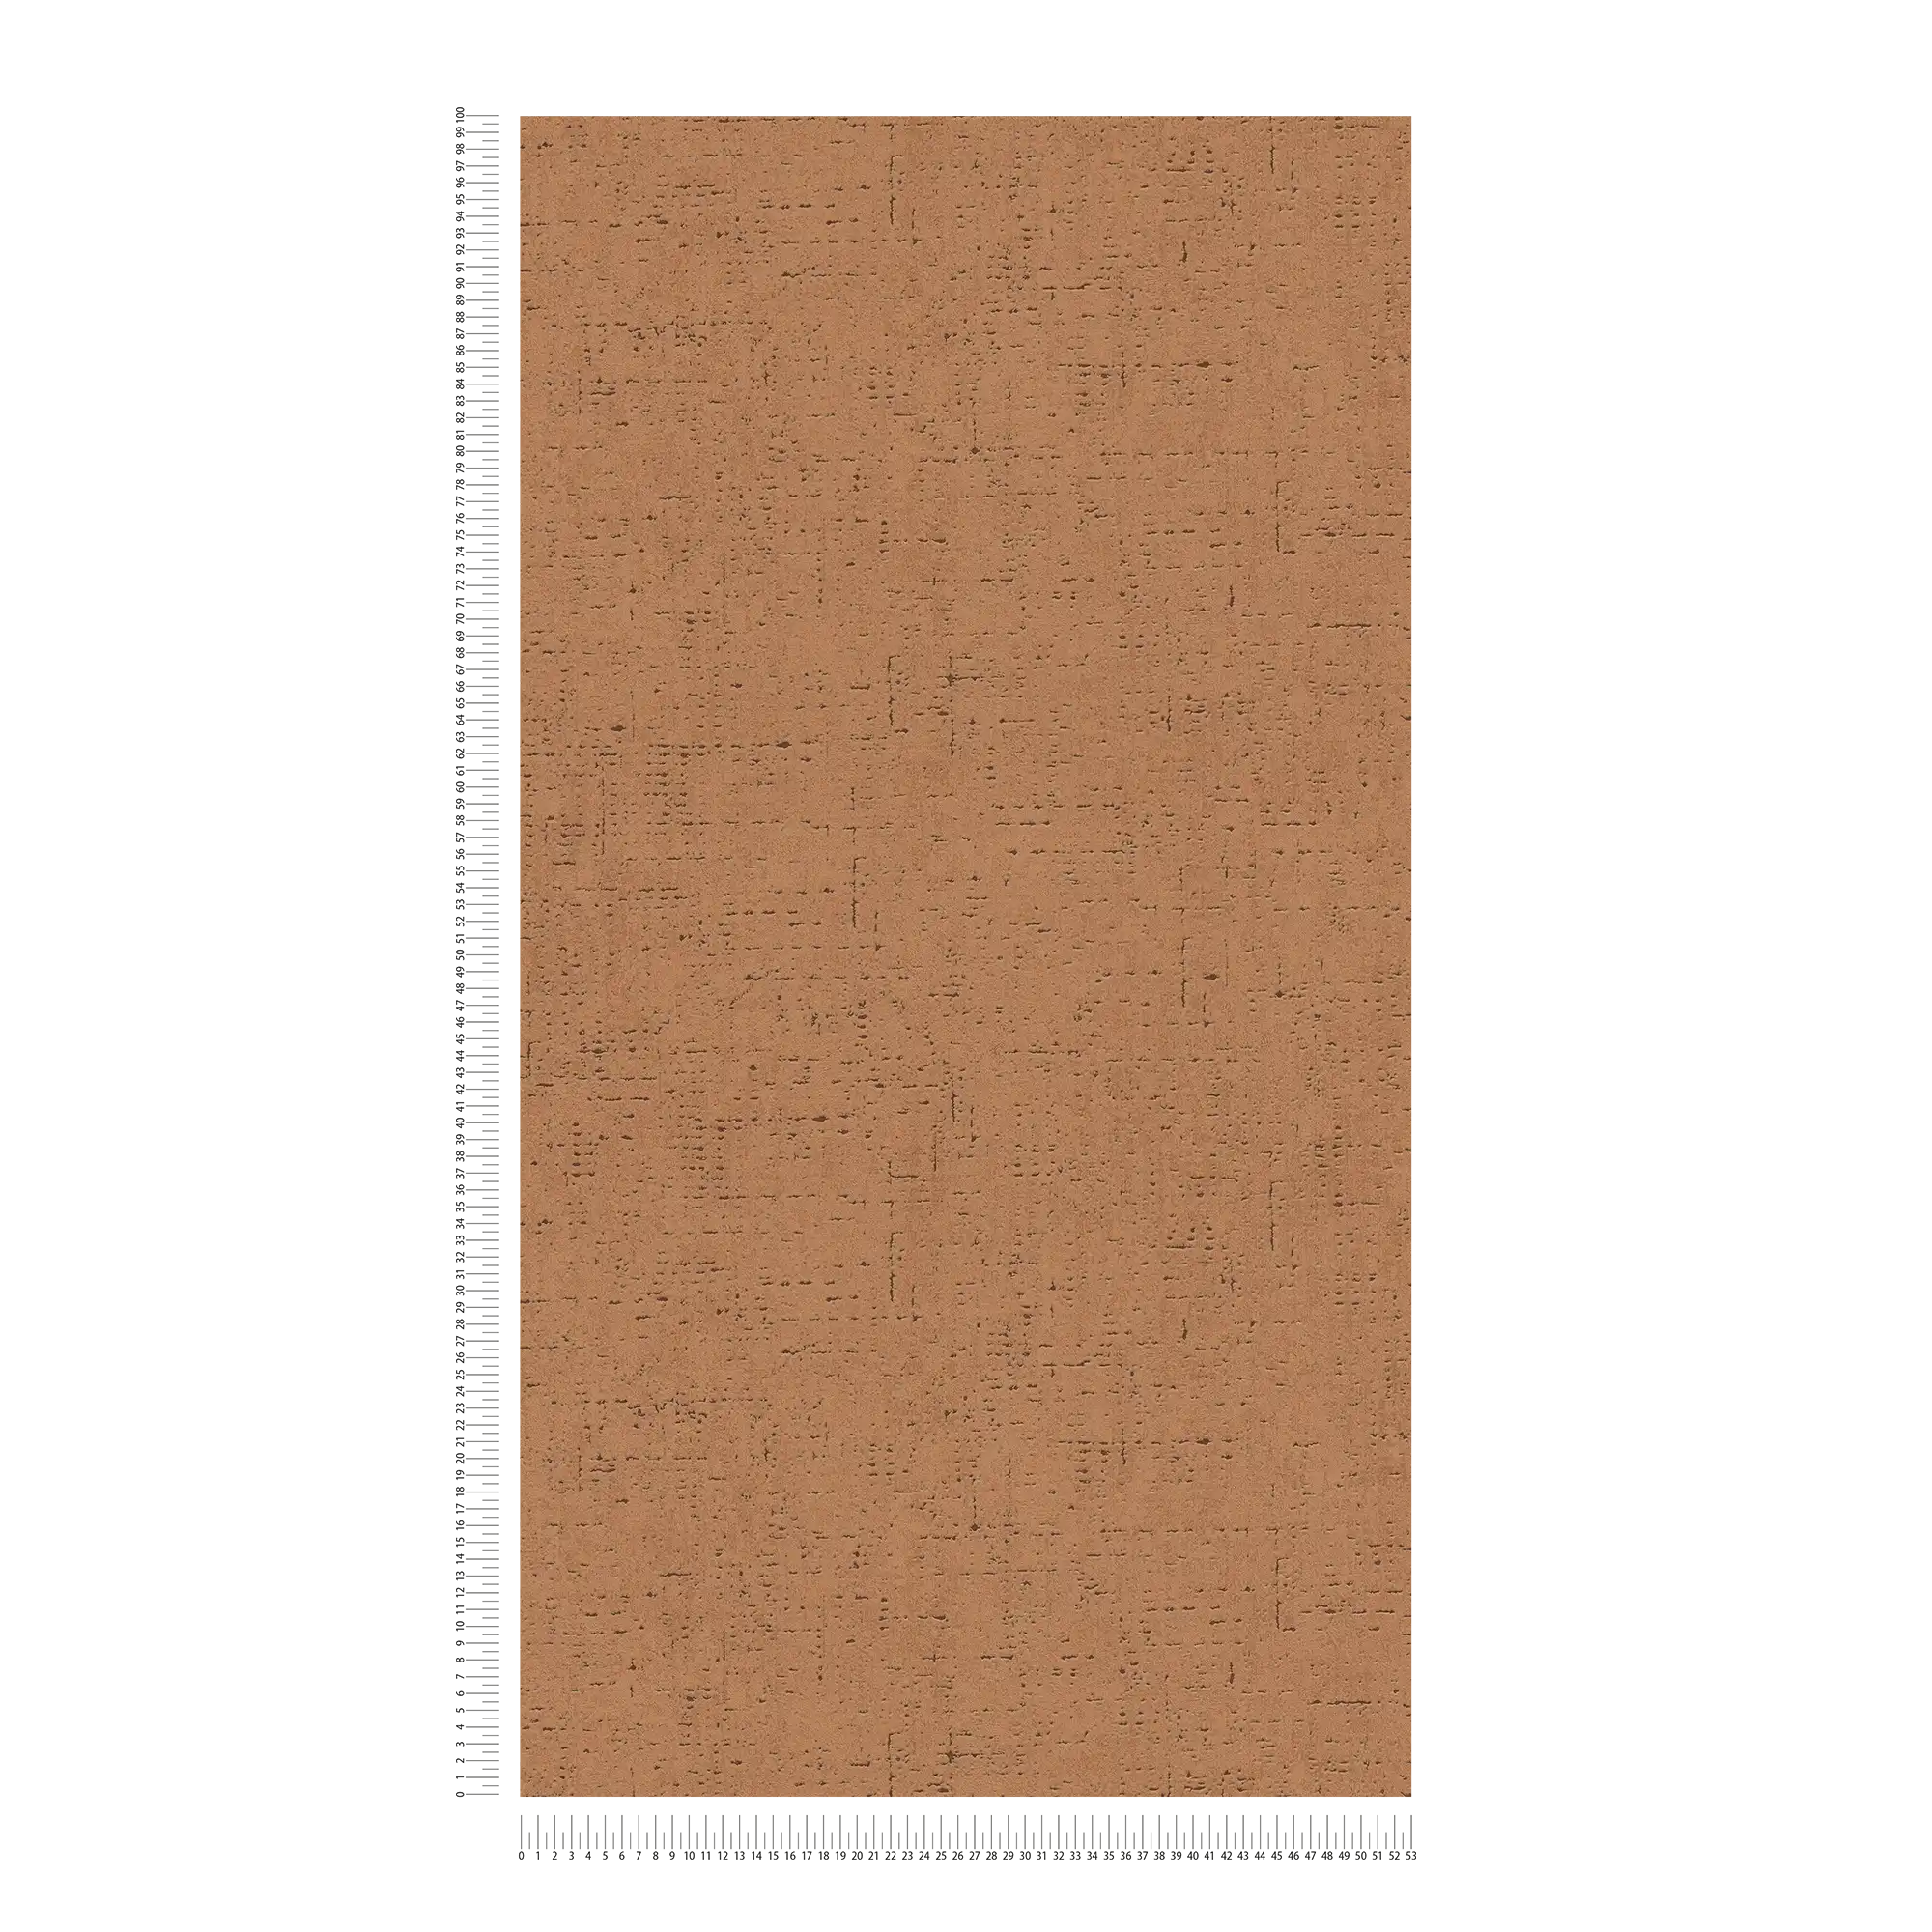             Plain wallpaper with cork motif & texture pattern - brown, orange
        